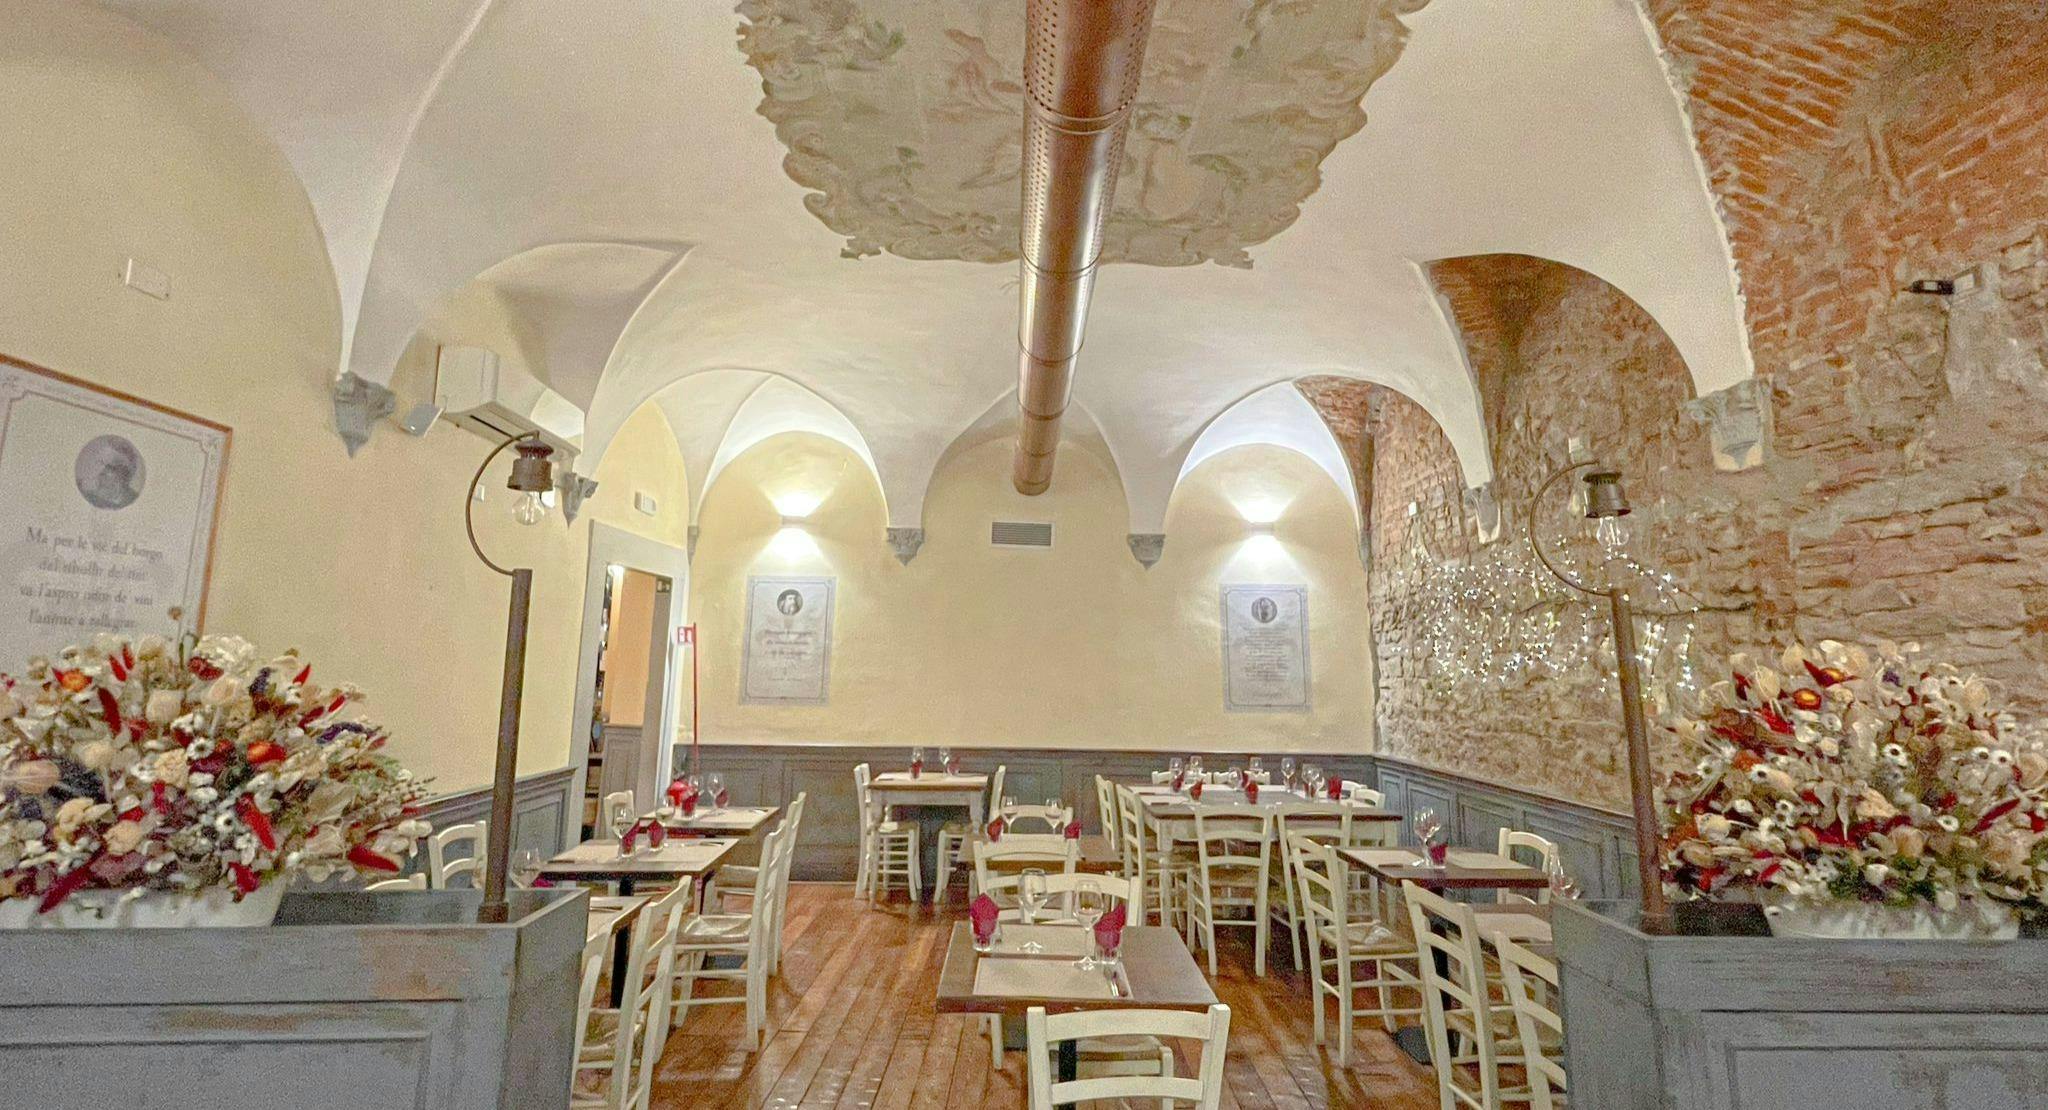 Photo of restaurant Mattacena in Centro storico, Florence